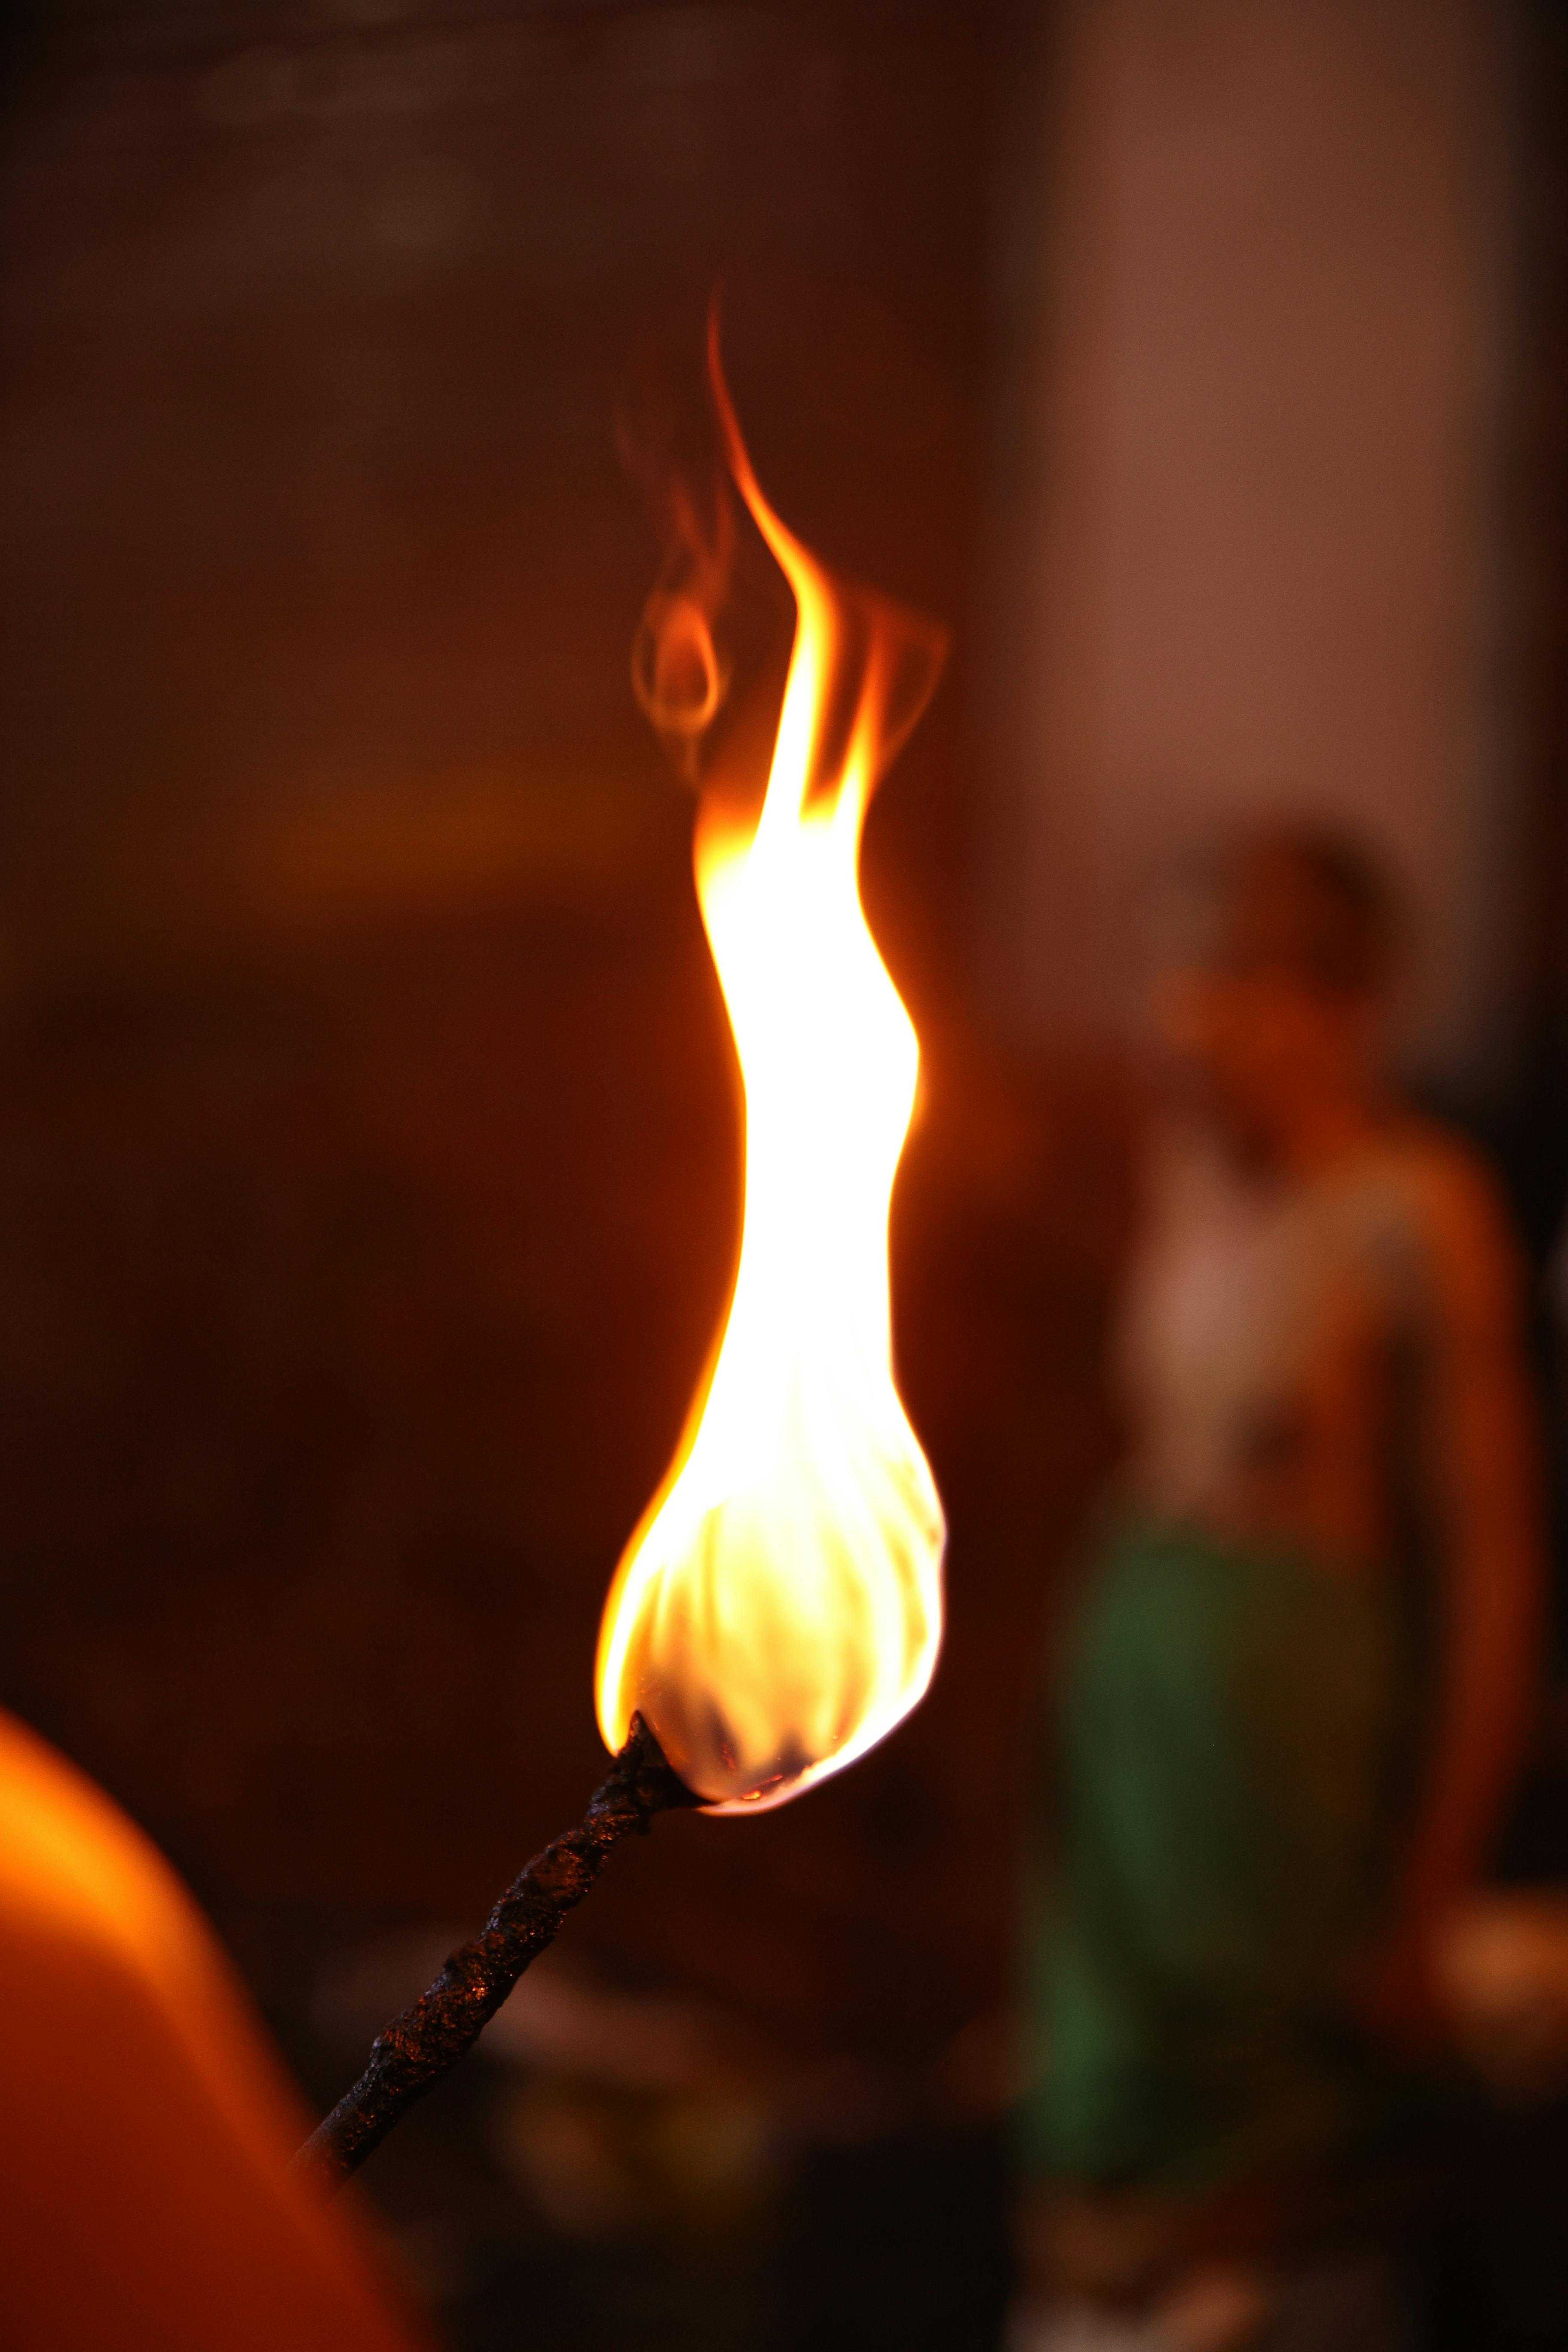 Torch fire wood burning Stock Photo by statuslapa